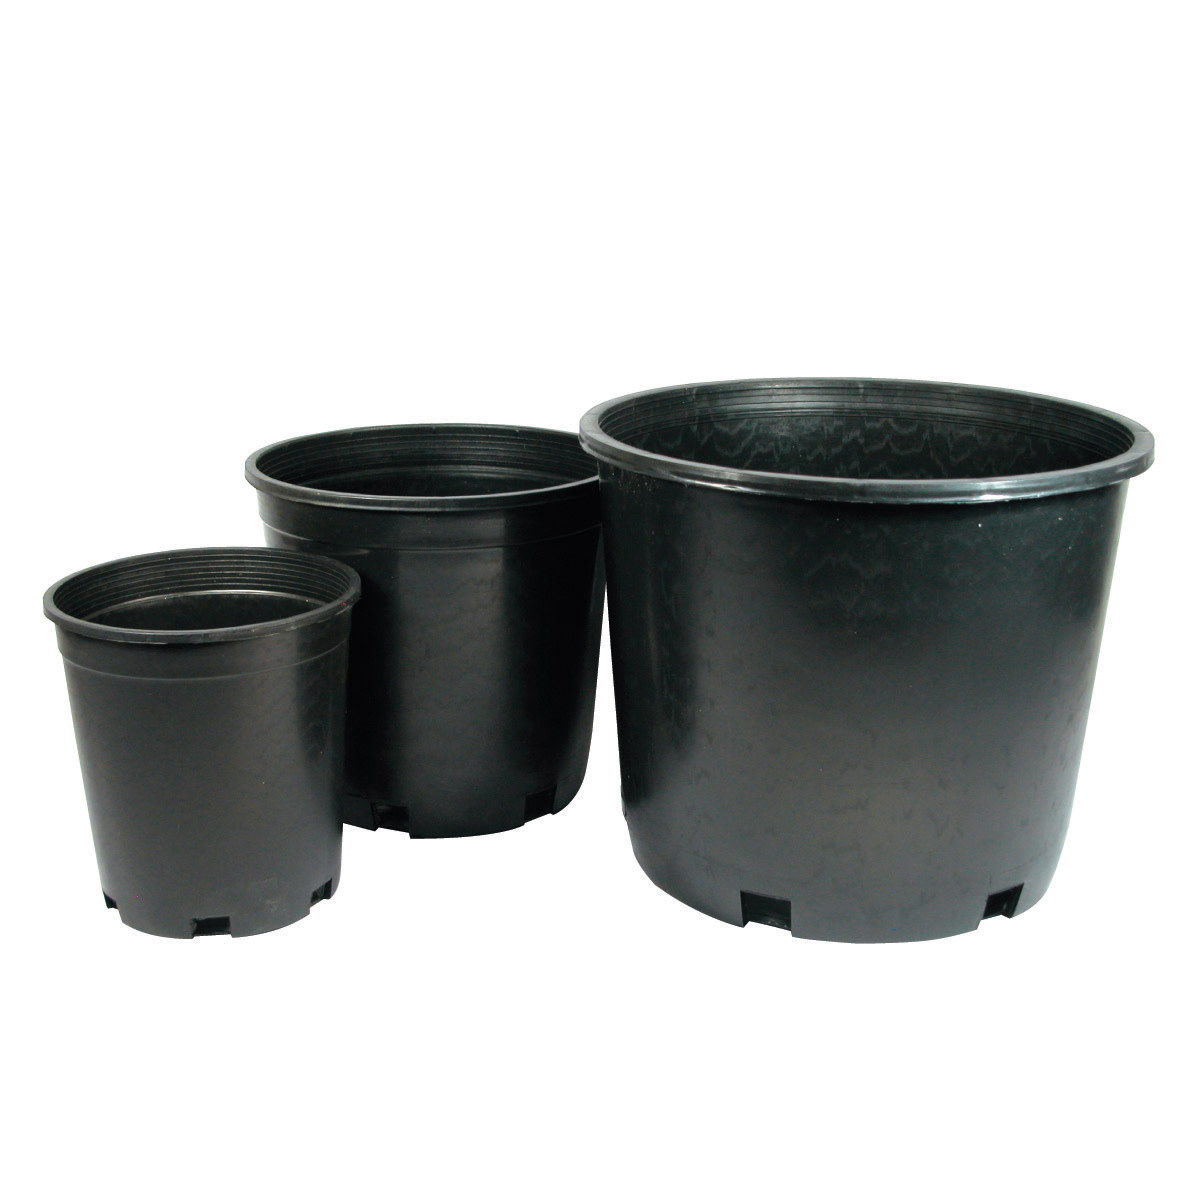 INP Nursery Pot Black 15 gal